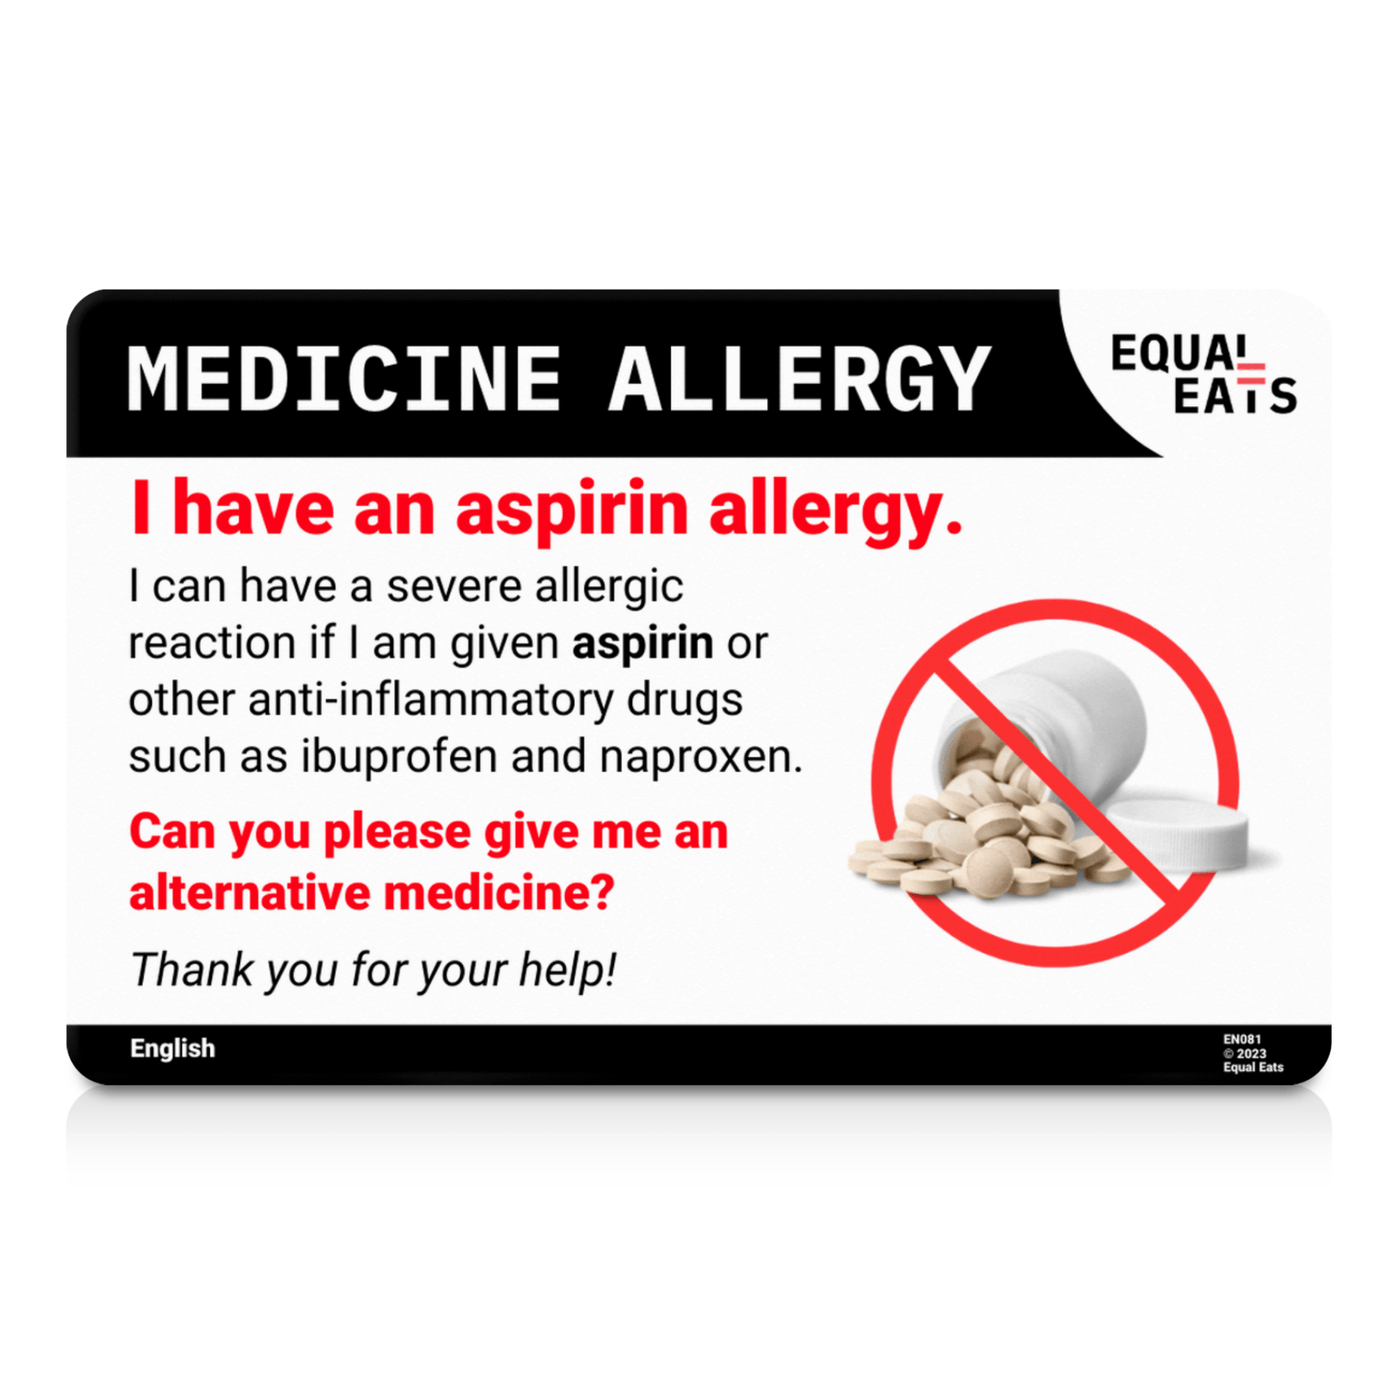 Swahili Aspirin Allergy Card